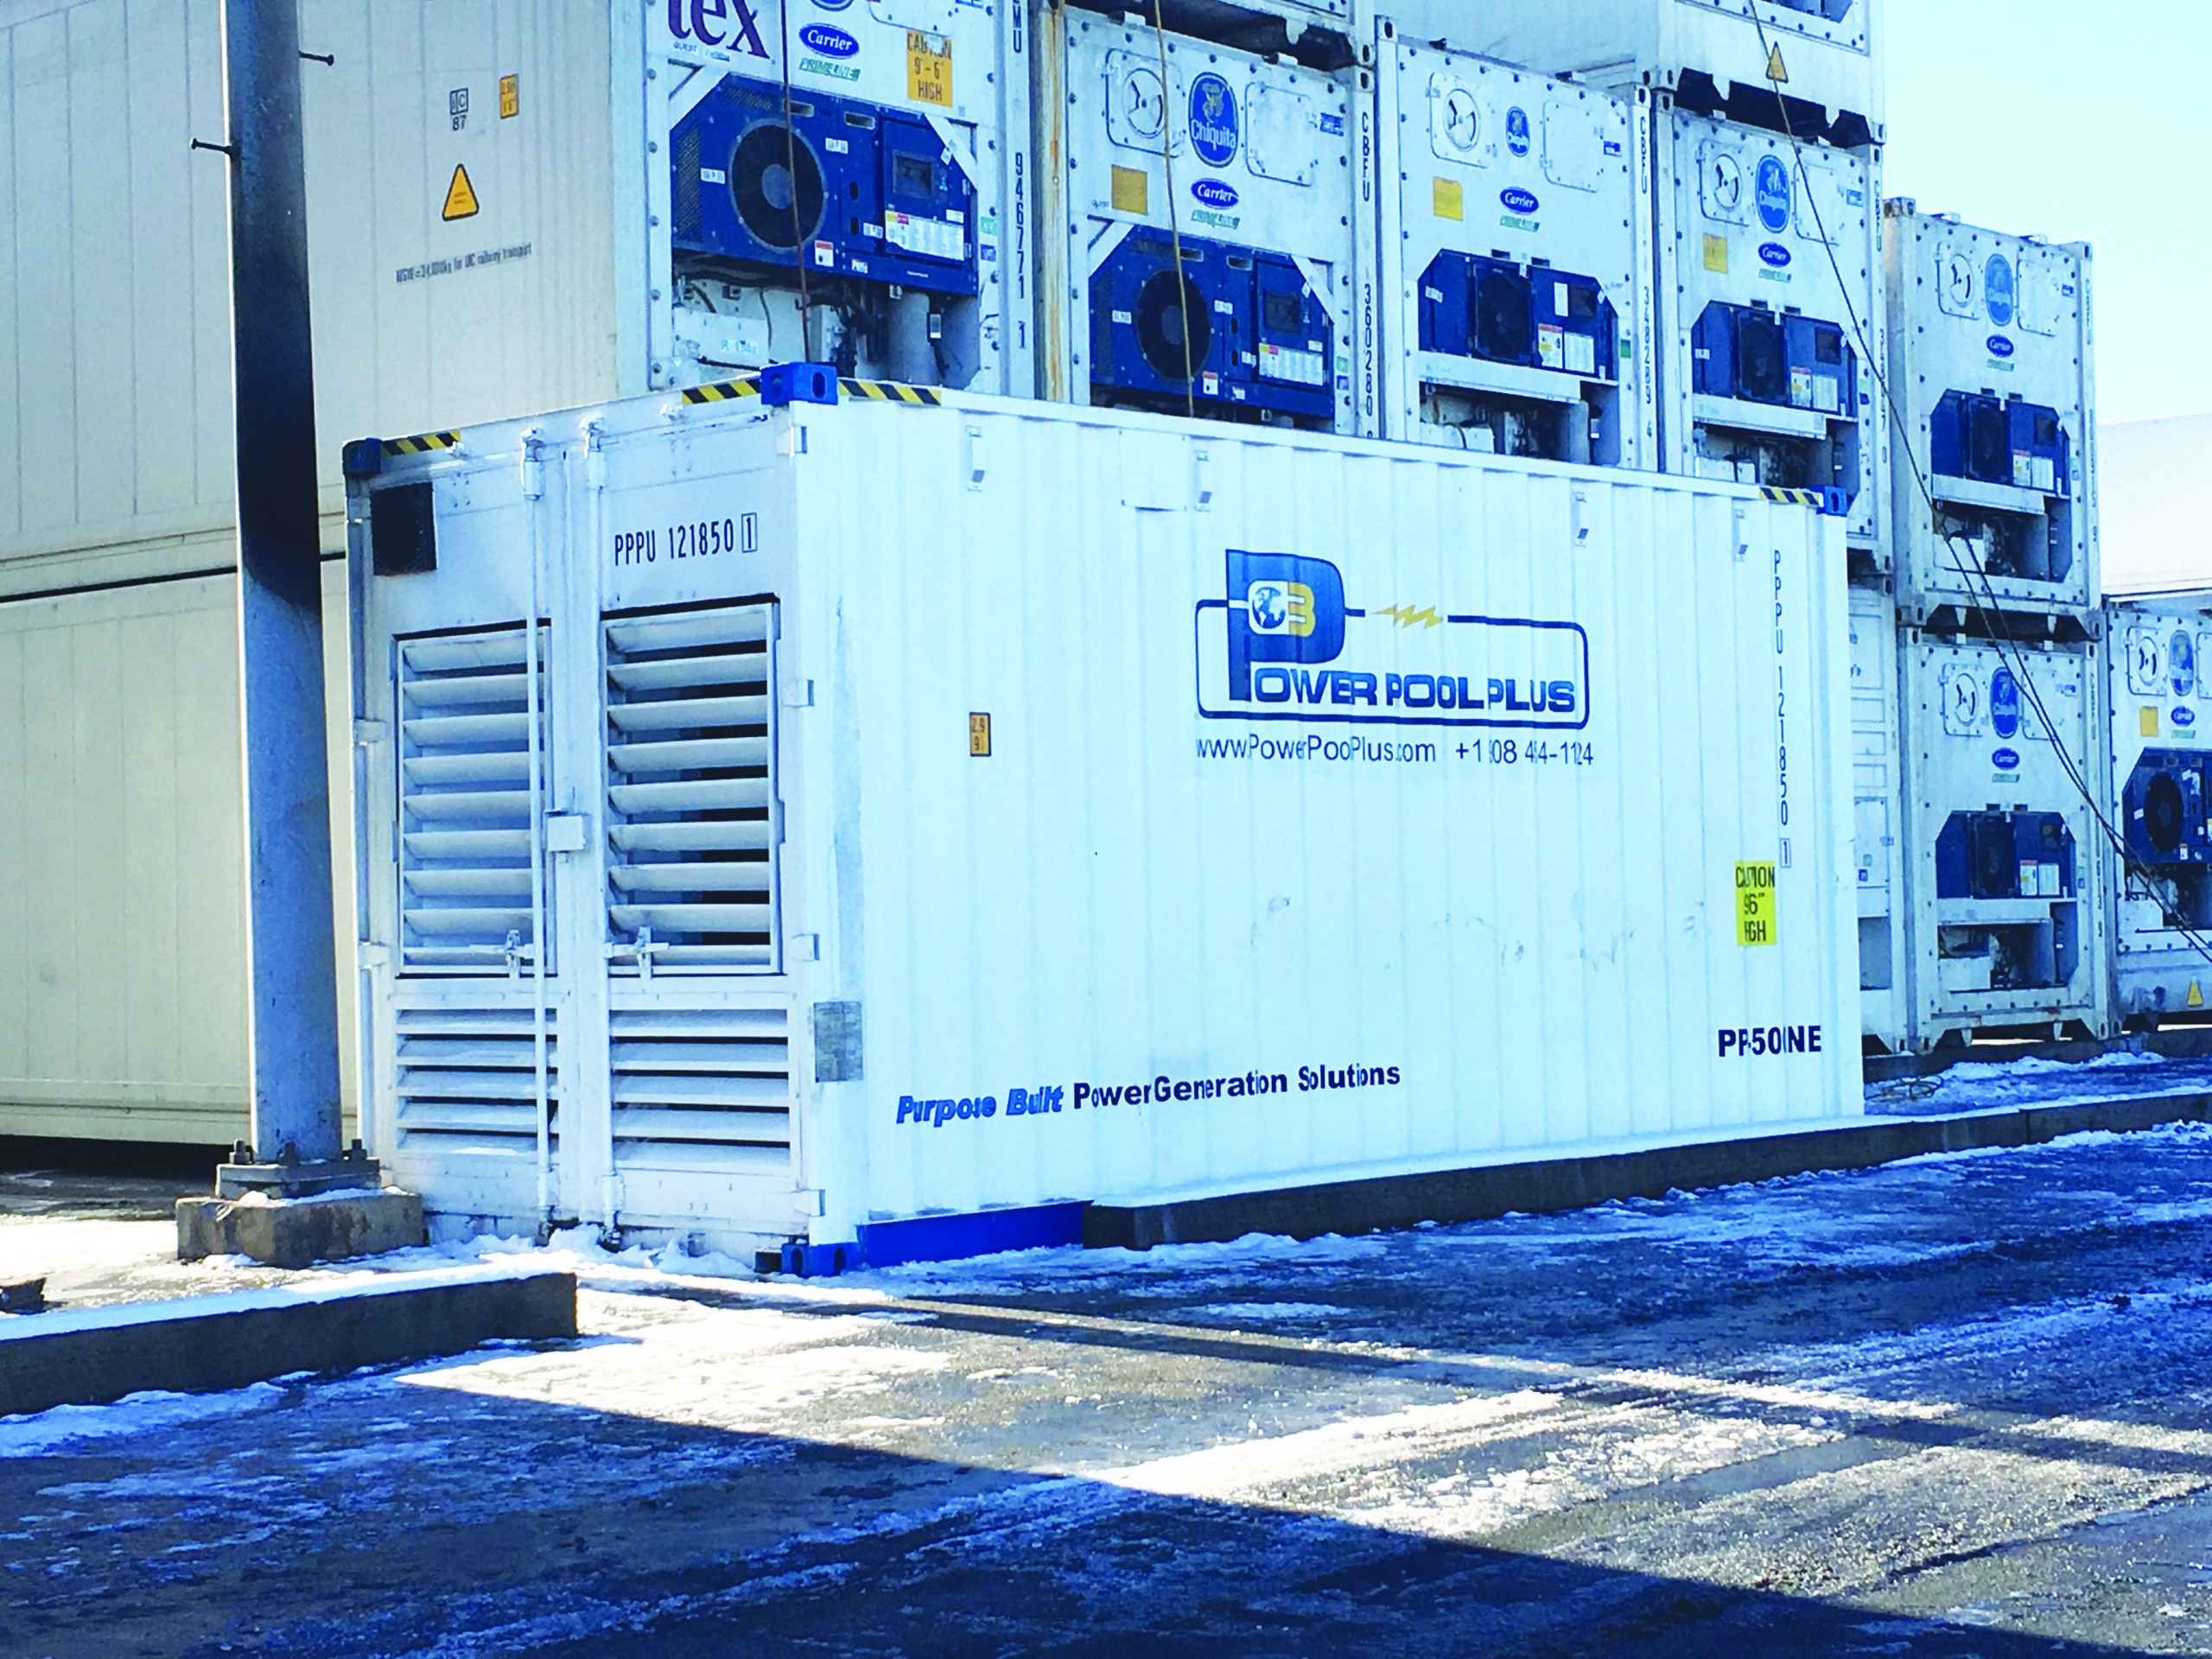 power pool plus custom generator solution refrigerated transport